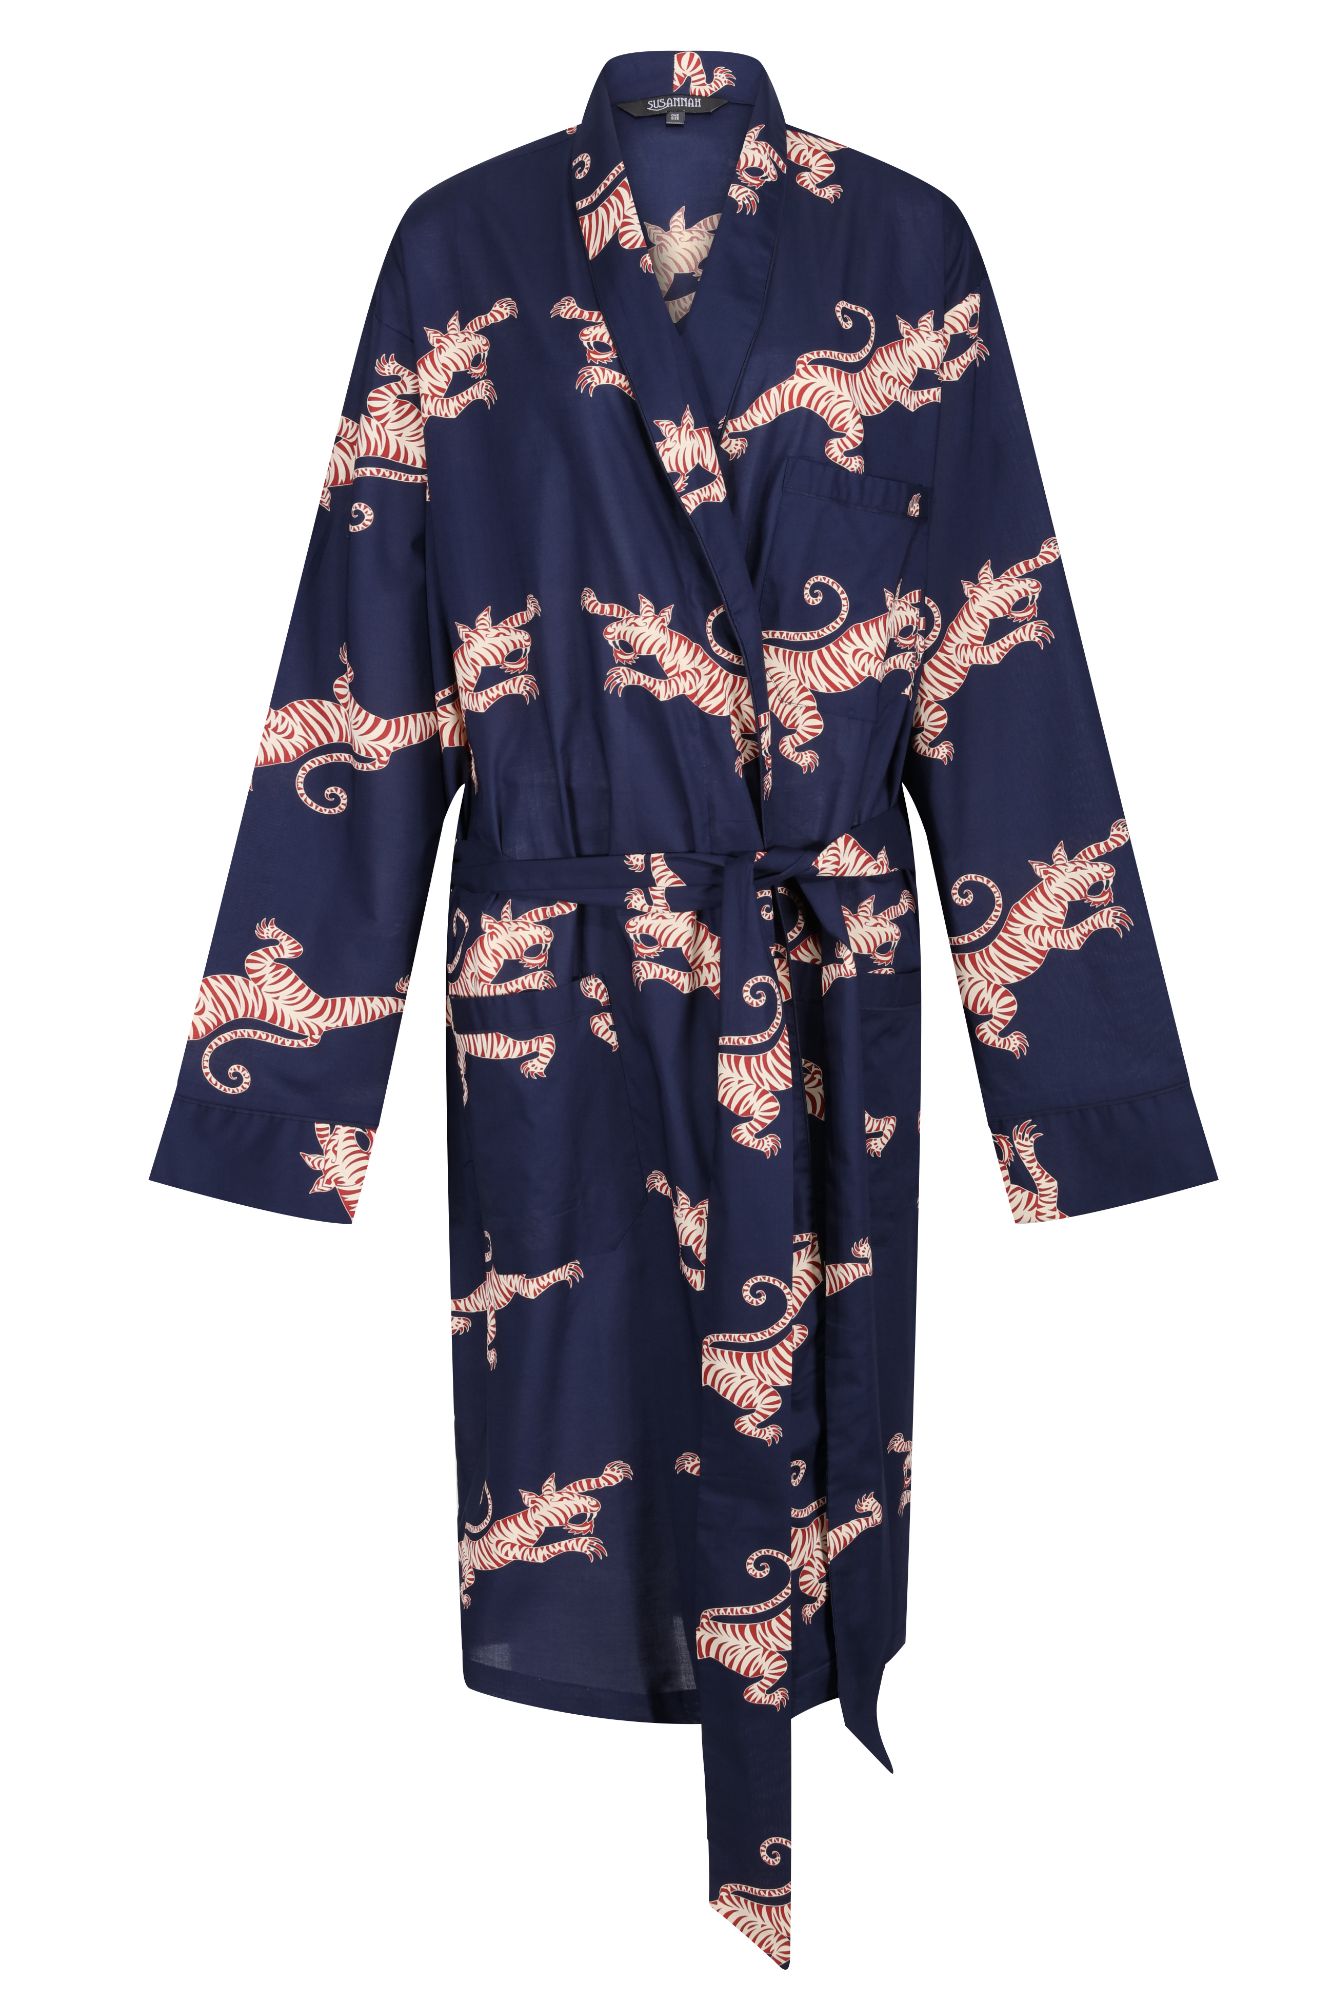 Susannah Cotton Womn's Cotton Kimono Robe: Fighting Tigers Red & Cream on Dark Blue